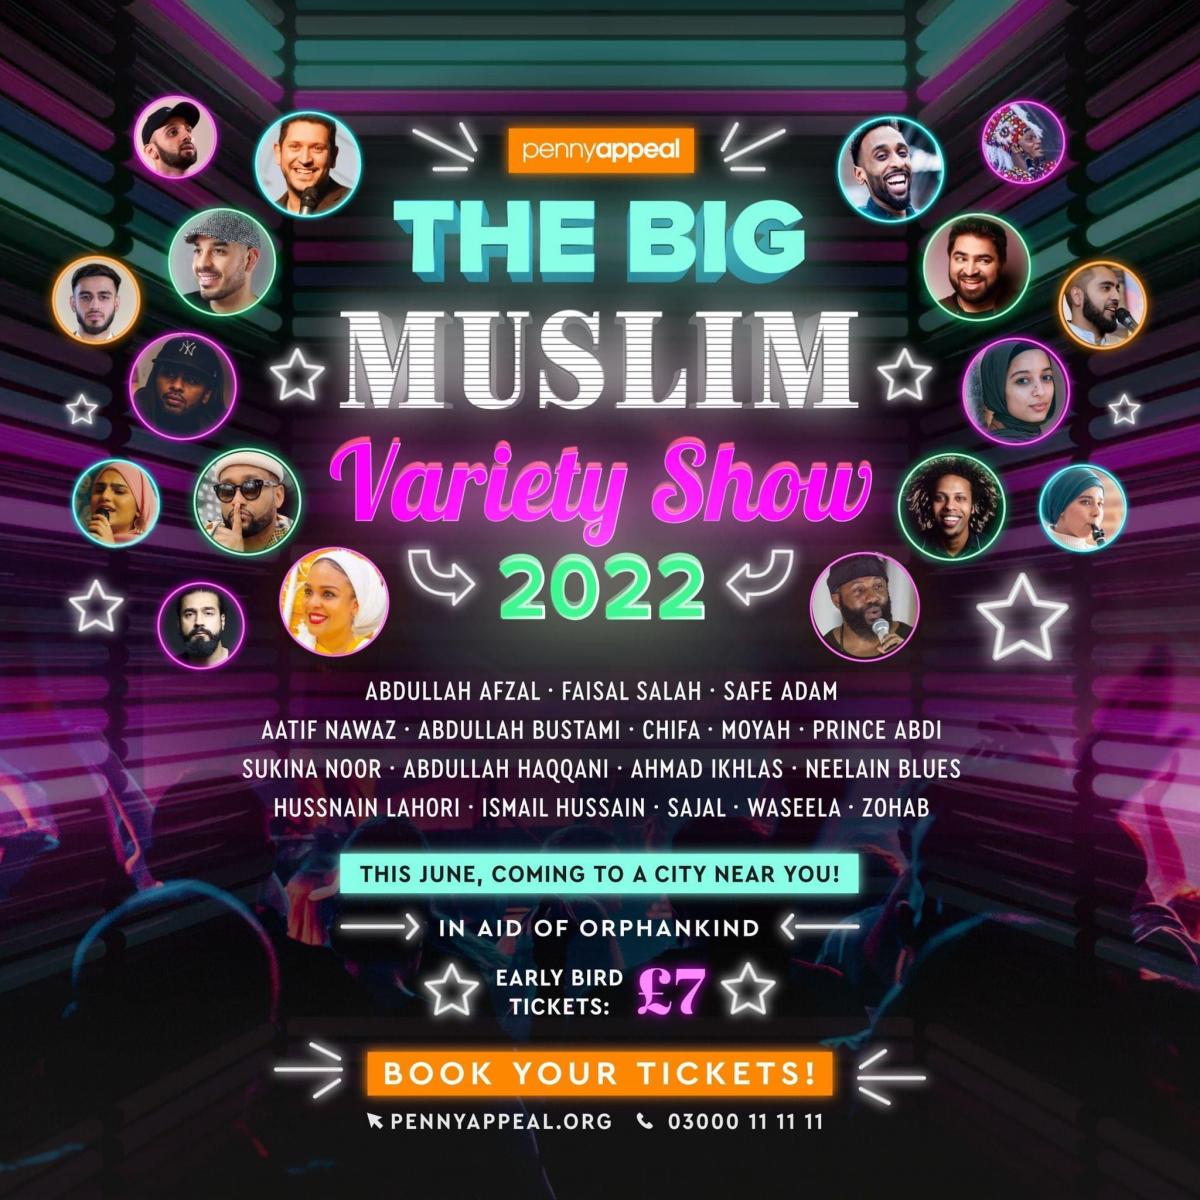 Muslim Variety Show งานมุสลิมที่ใหญ่ที่สุดในอังกฤษ กลับมาอีกครั้ง !!